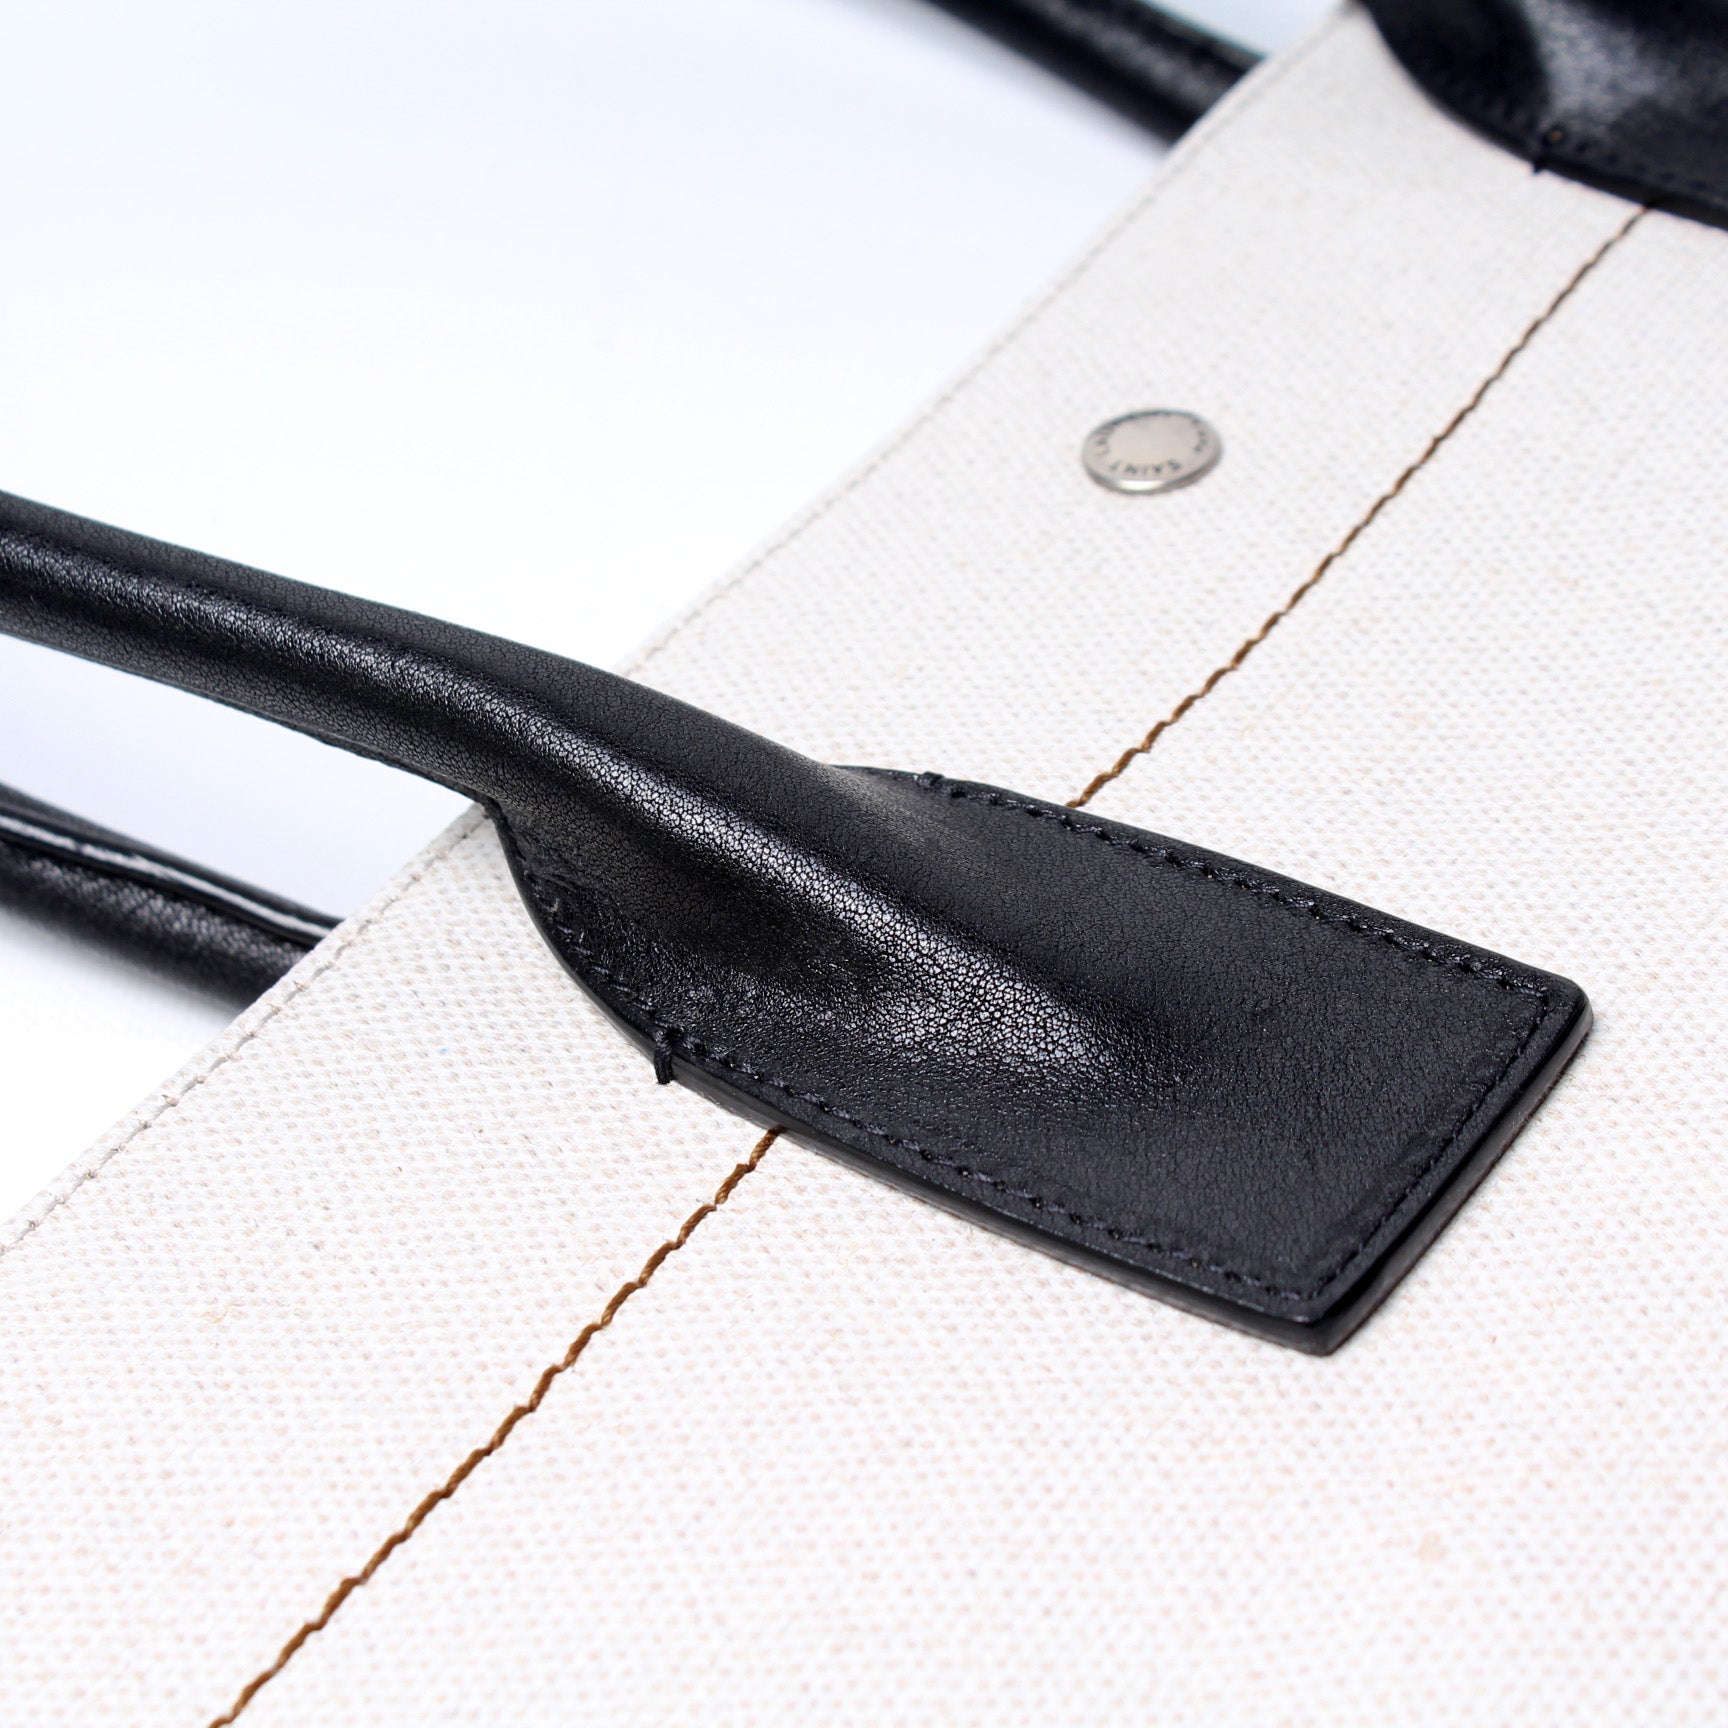 Rive Gauche Tote Bag Small – Keeks Designer Handbags